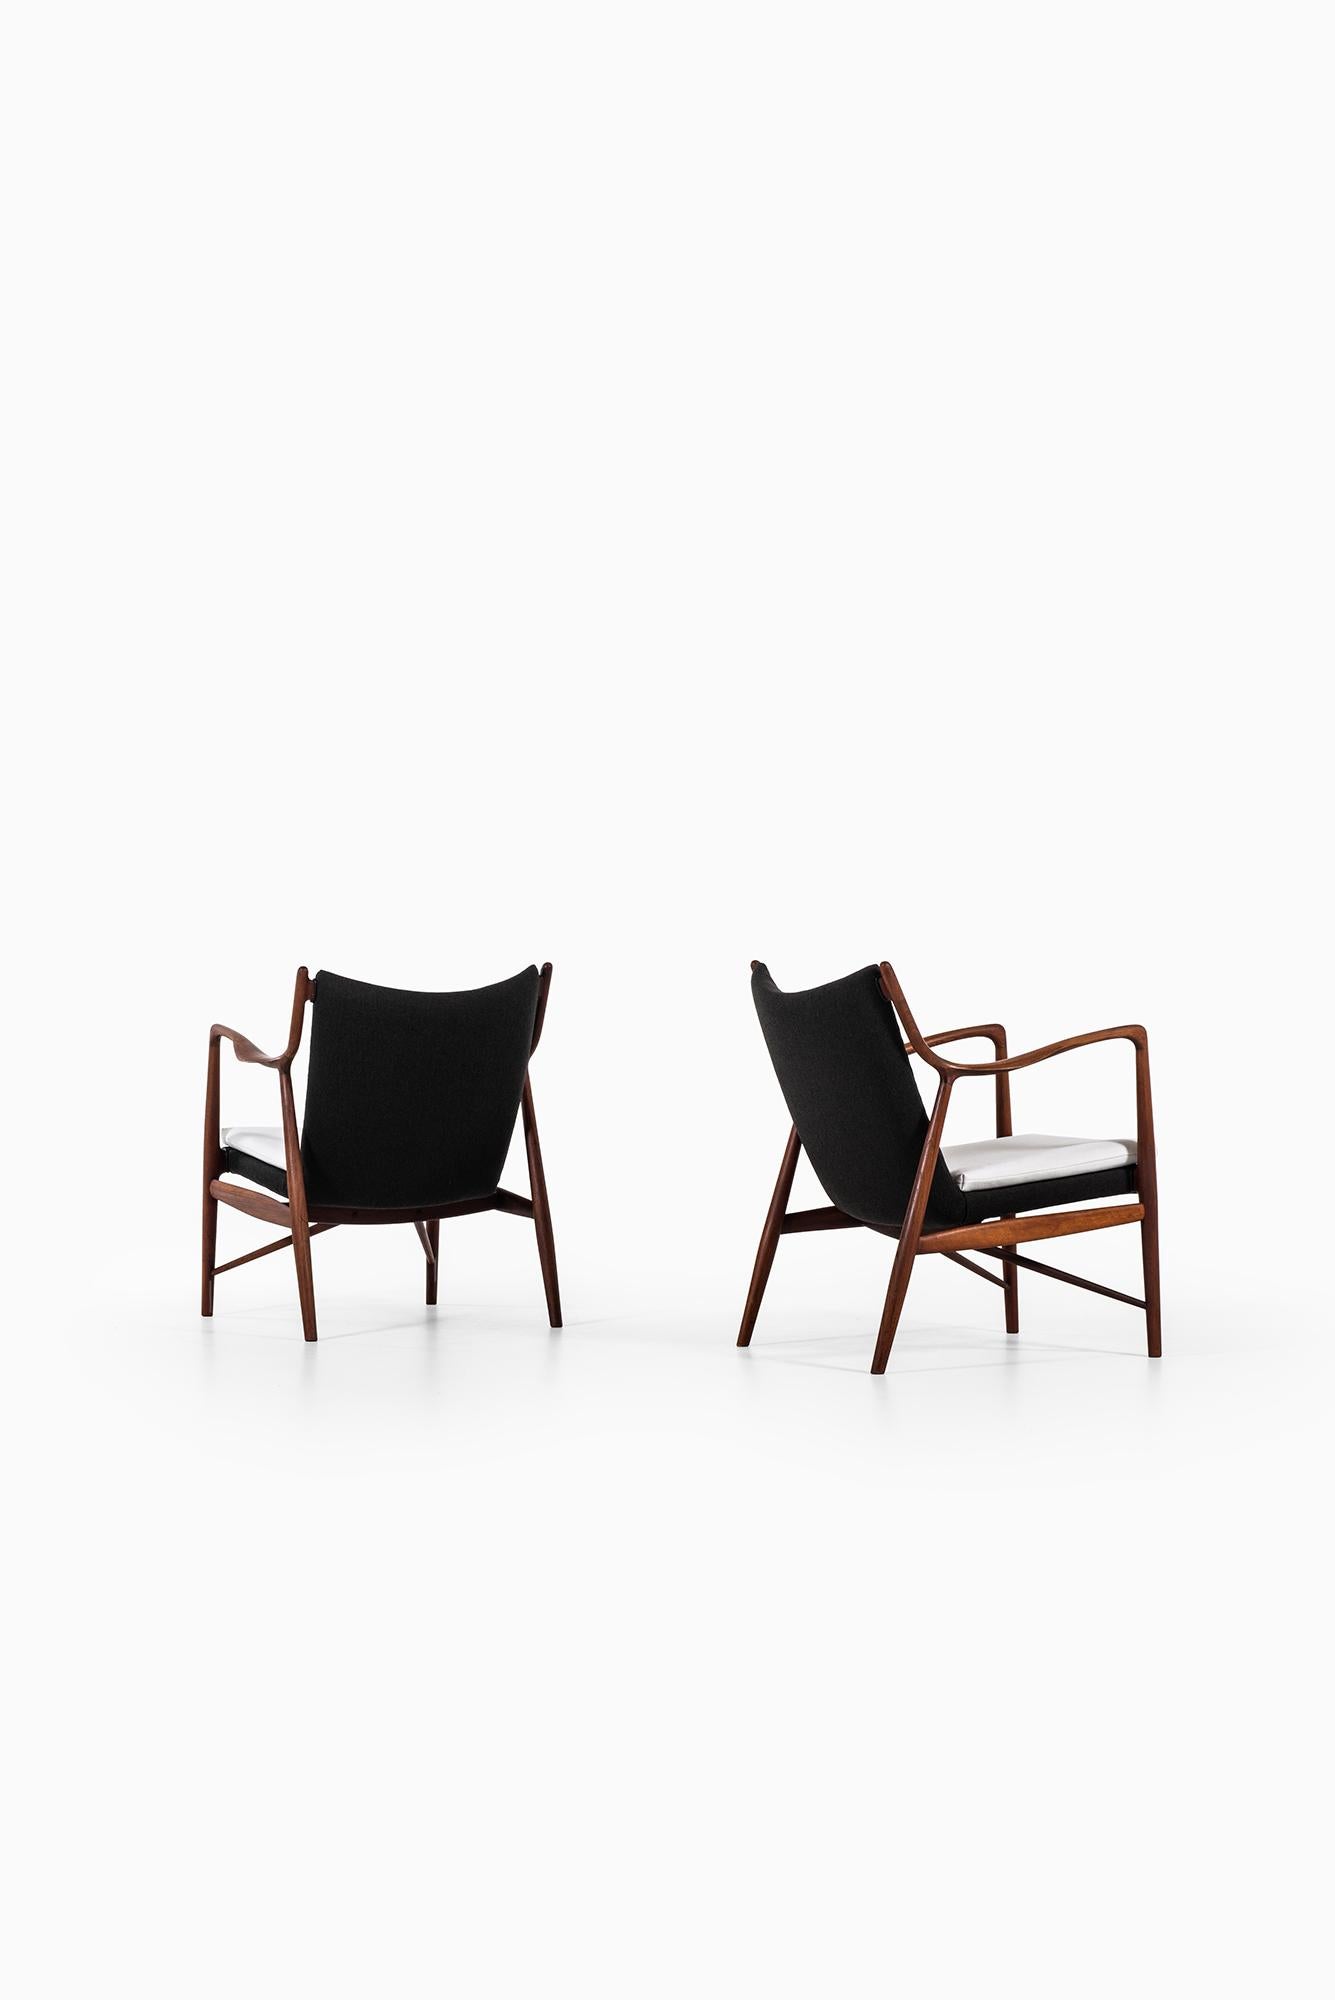 Fabric Finn Juhl NV-45 Easy Chairs by Niels Vodder in Denmark